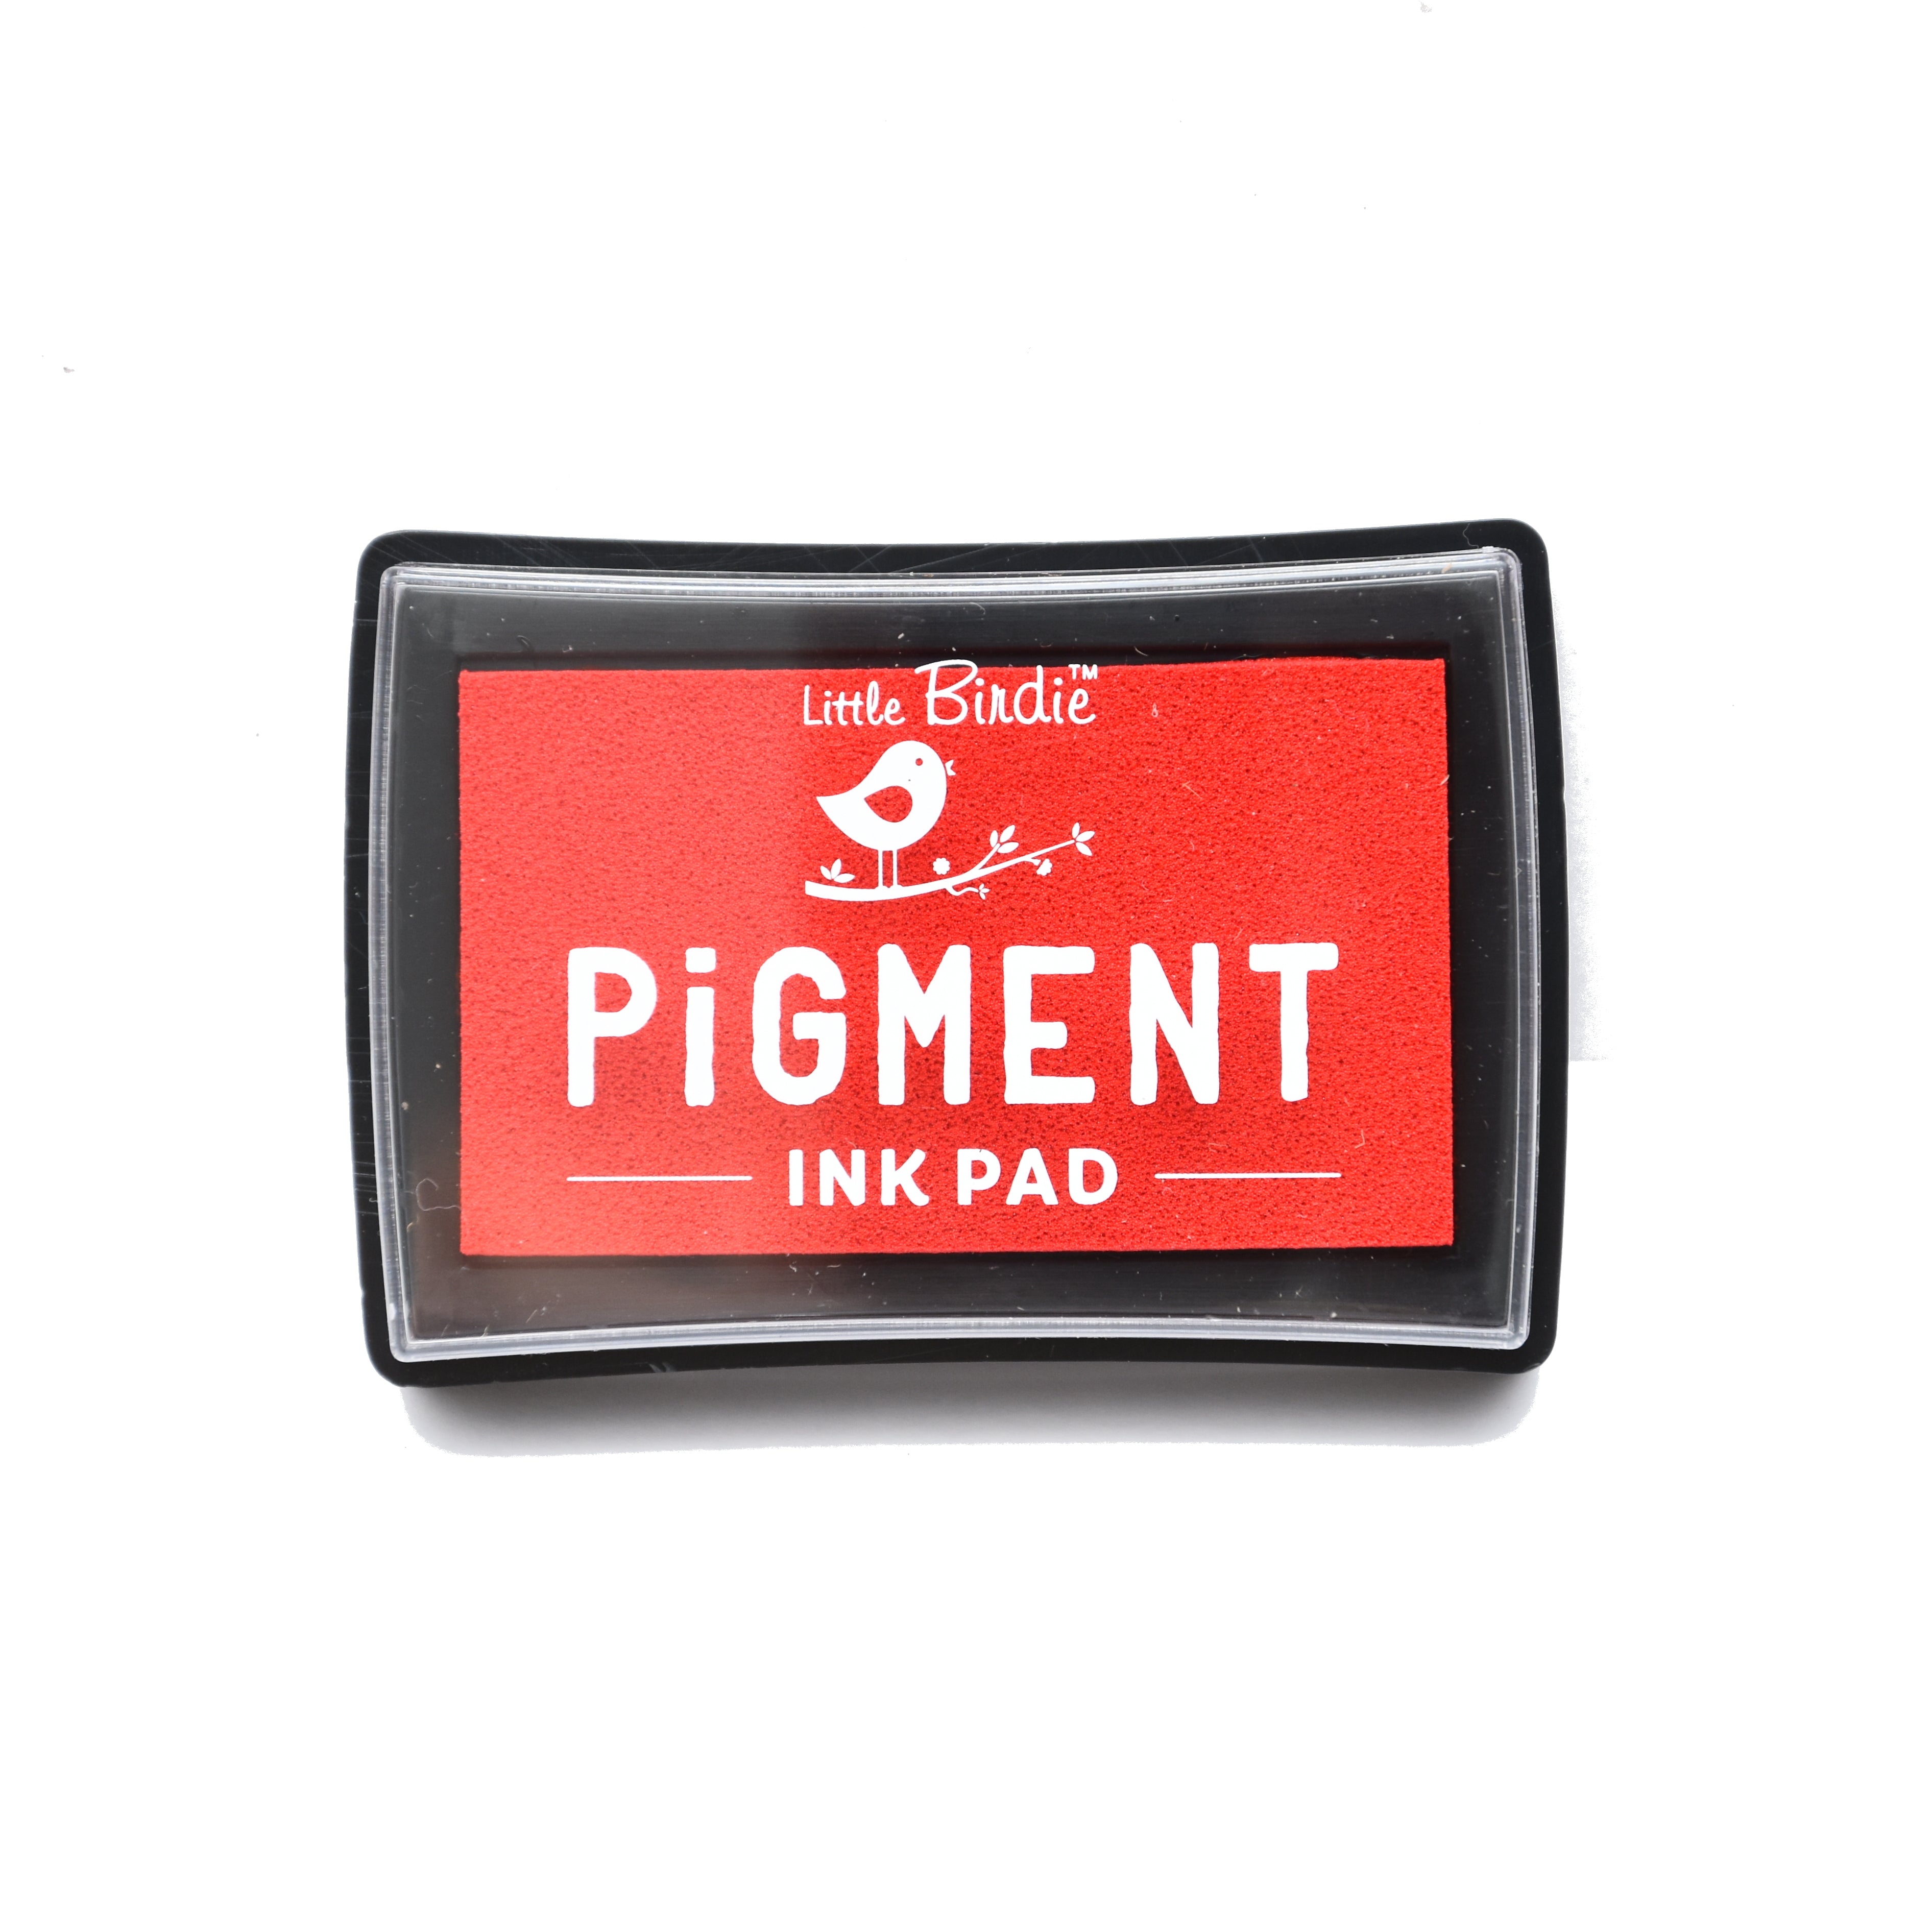 Pigment Ink Pad Cranberry Tart P1 1Pc Lb